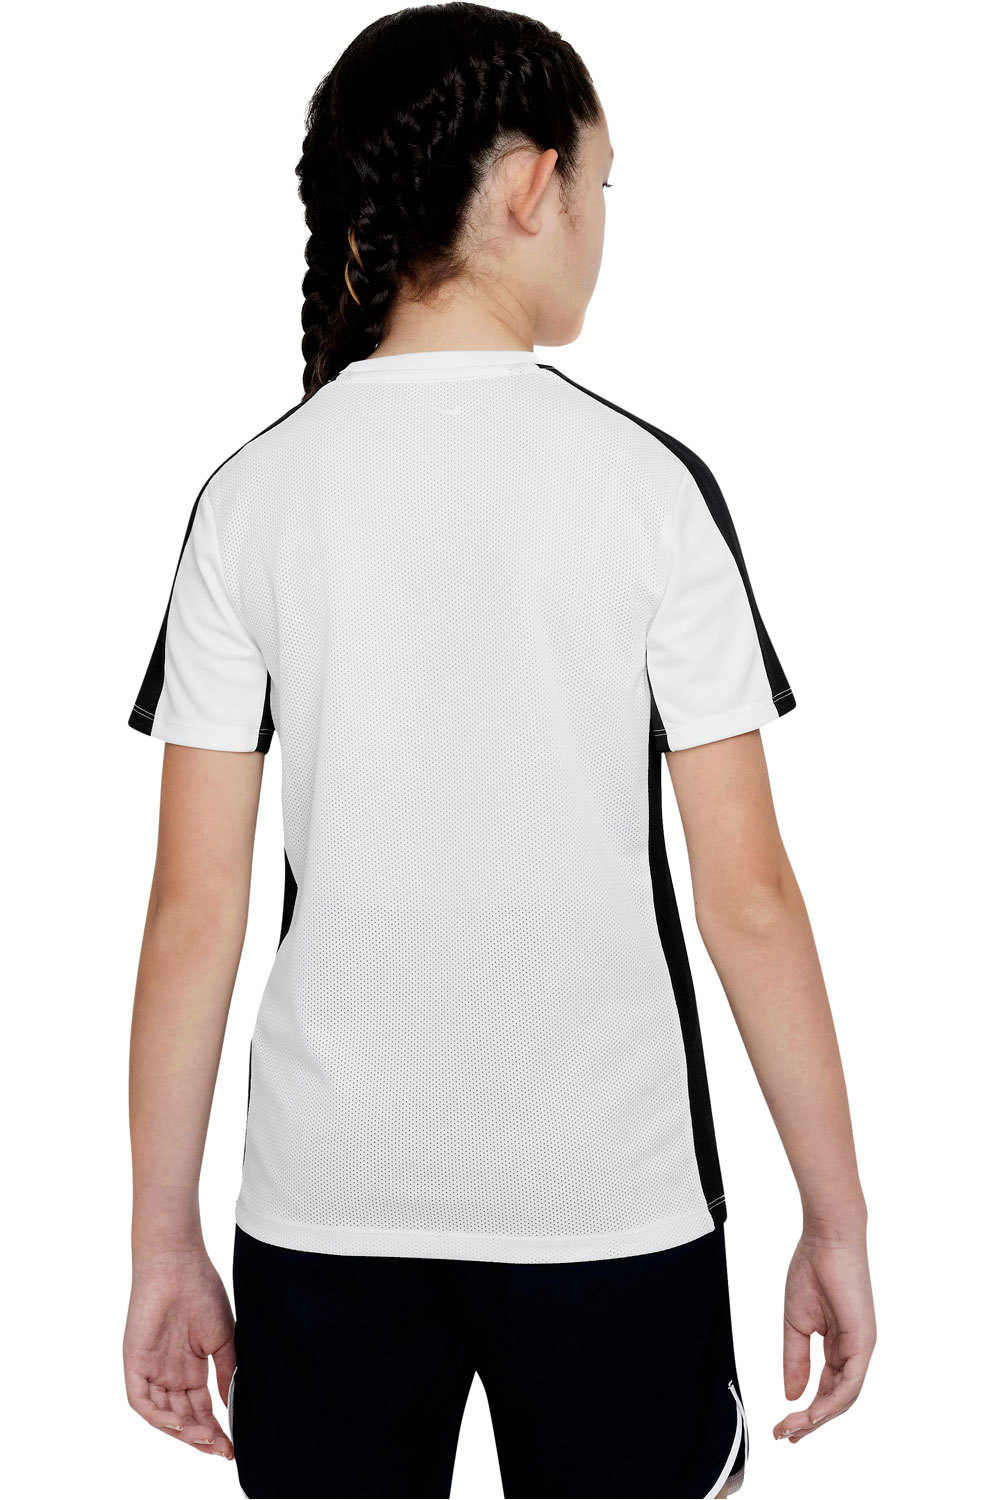 Nike camisetas entrenamiento futbol manga corta niño K NK DF ACD23 TOP SS BR BLNE vista trasera